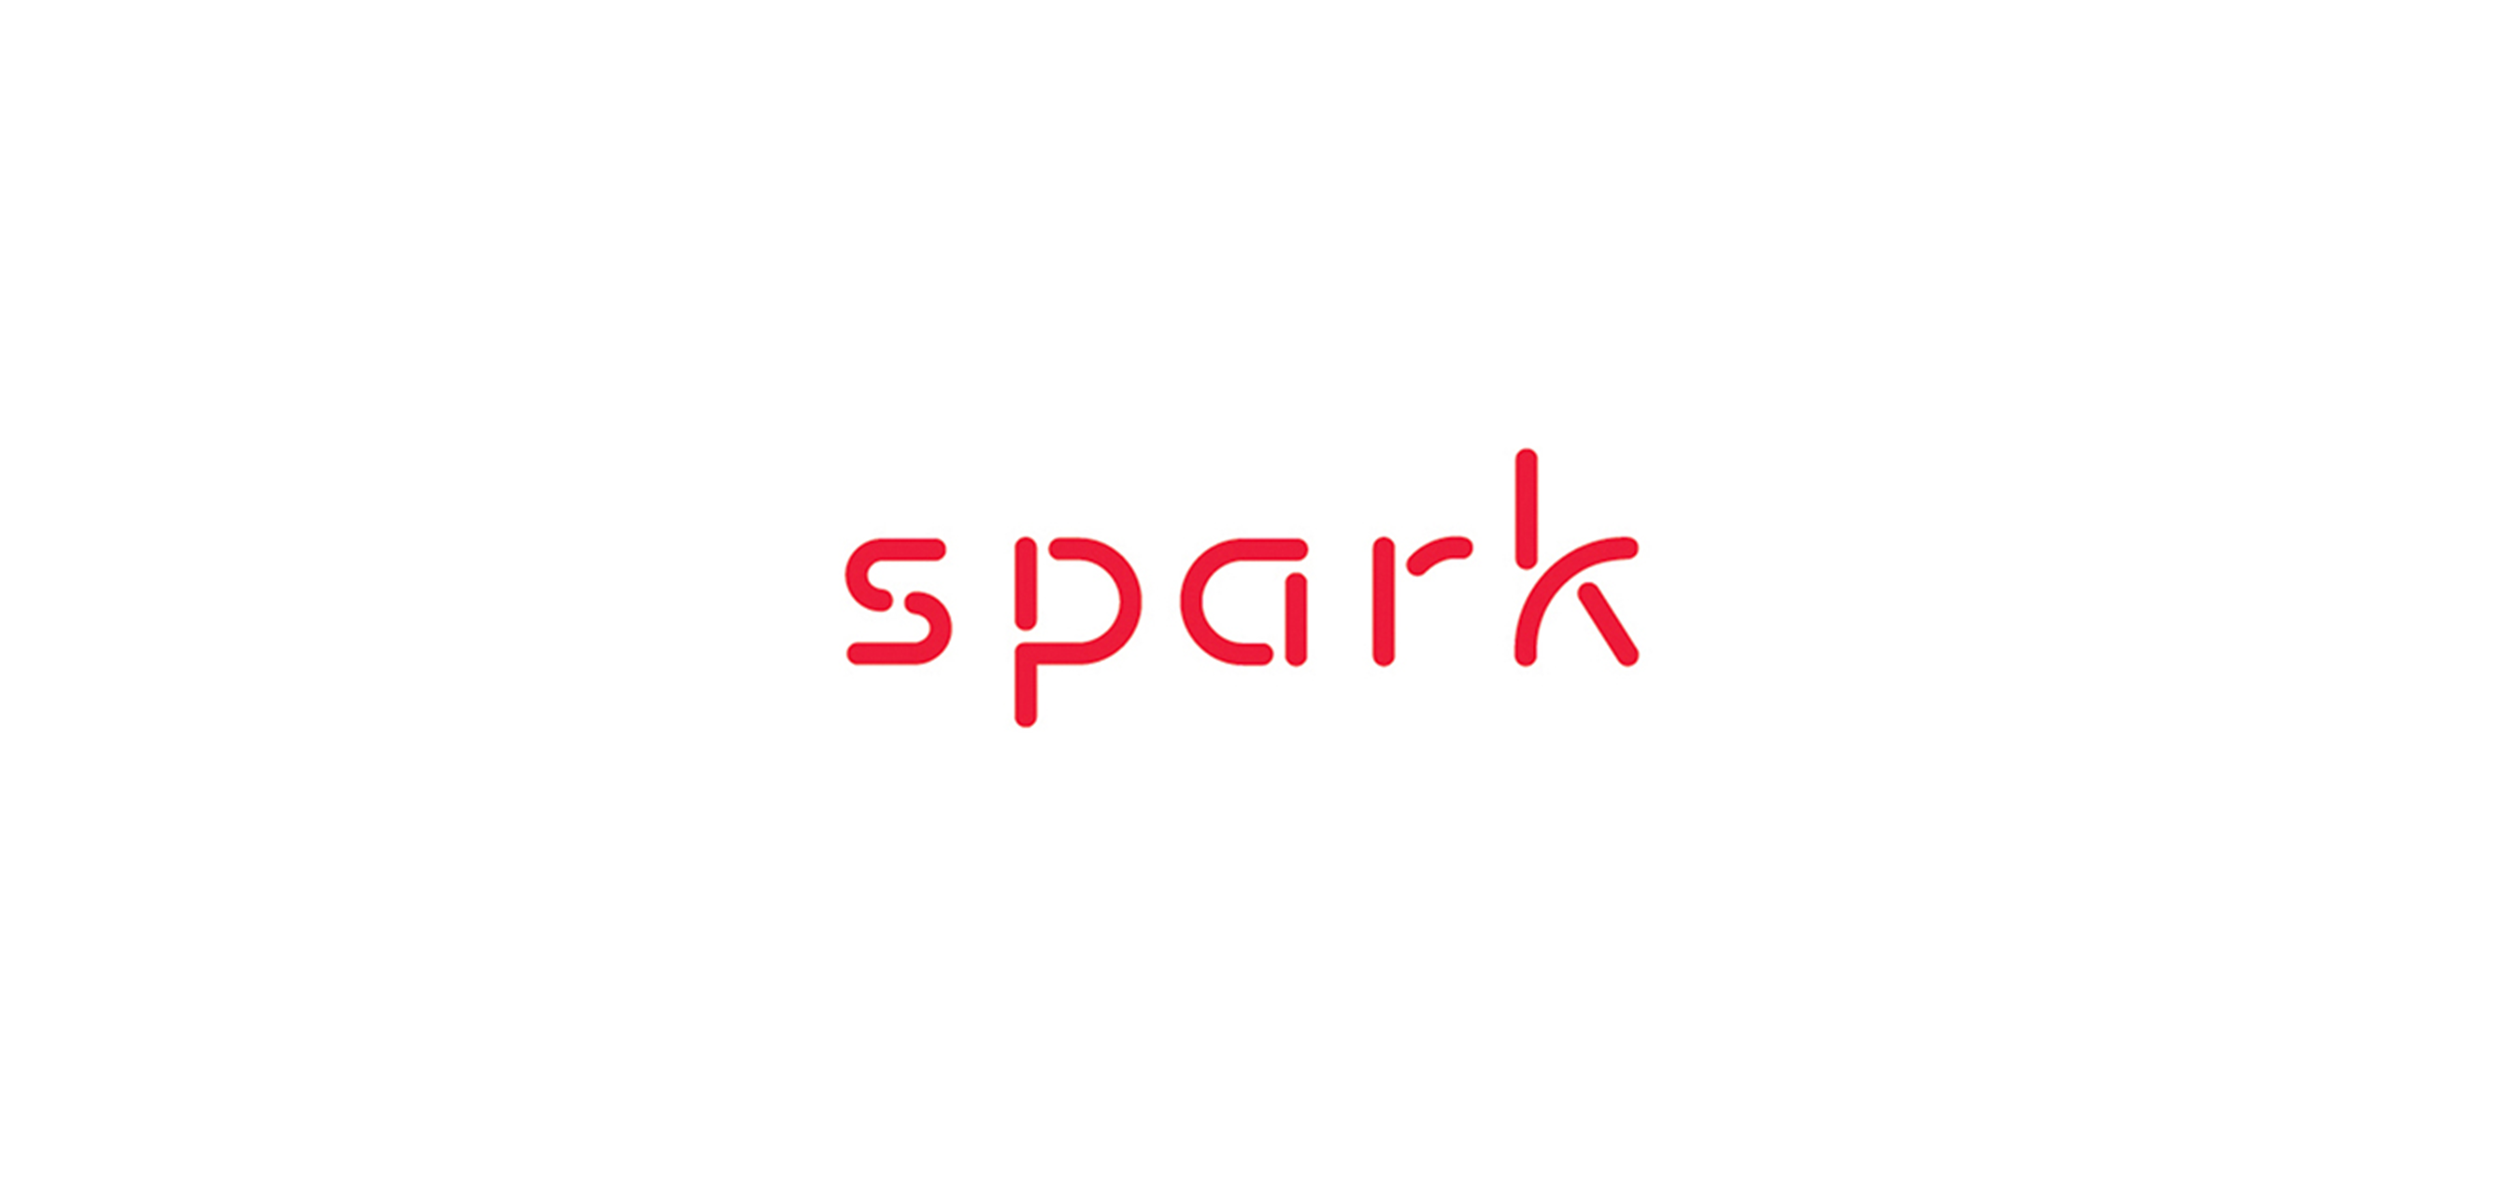 mysisterfred-spark-logo.png